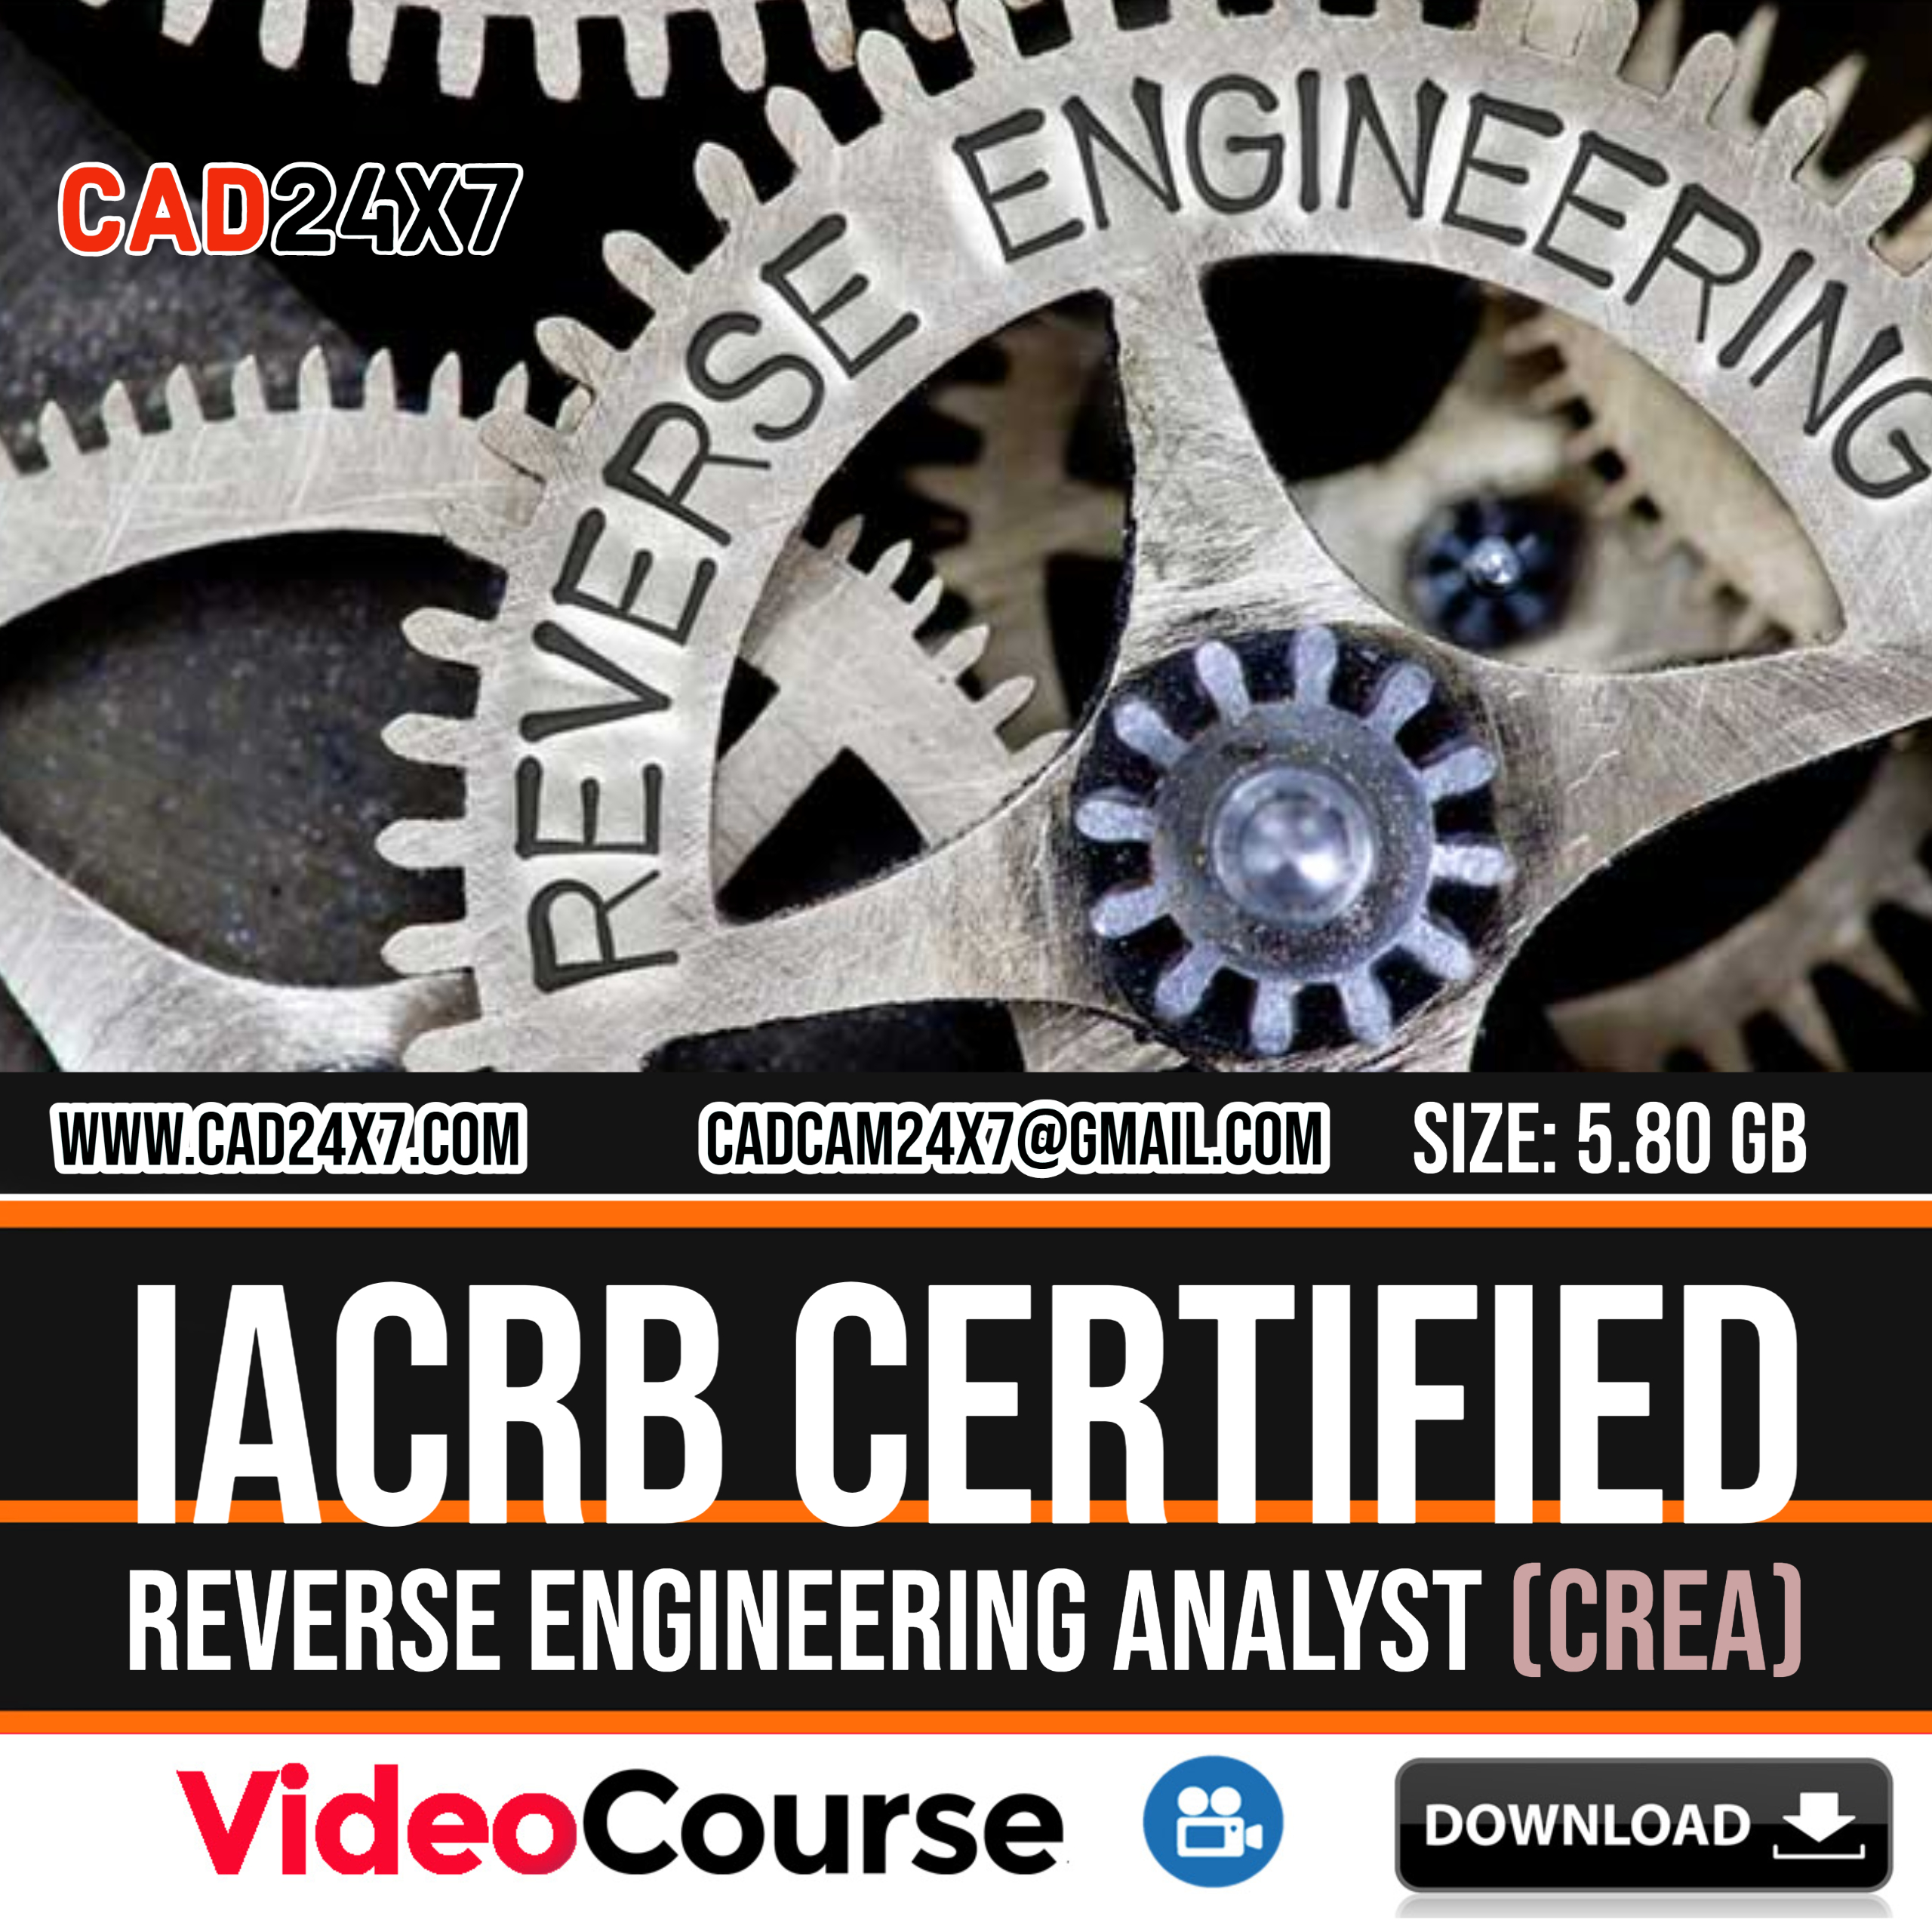 IACRB Certified Reverse Engineering Analyst (CREA)